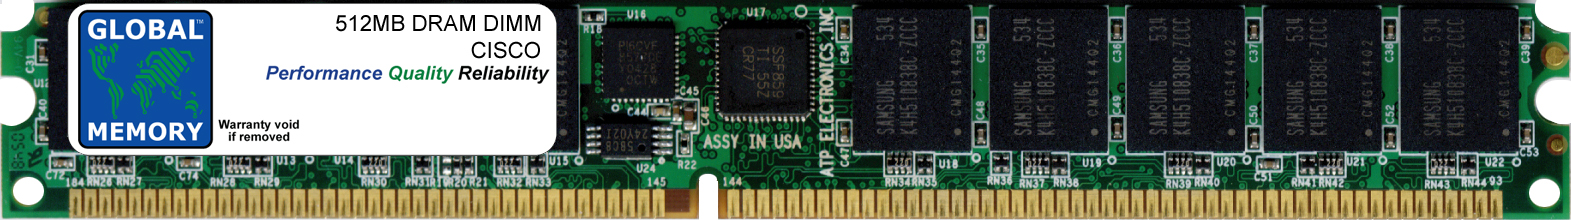 512MB DRAM DIMM MEMORY RAM FOR CISCO 3925 / 3945 ROUTERS (MEM-3900-512MB)